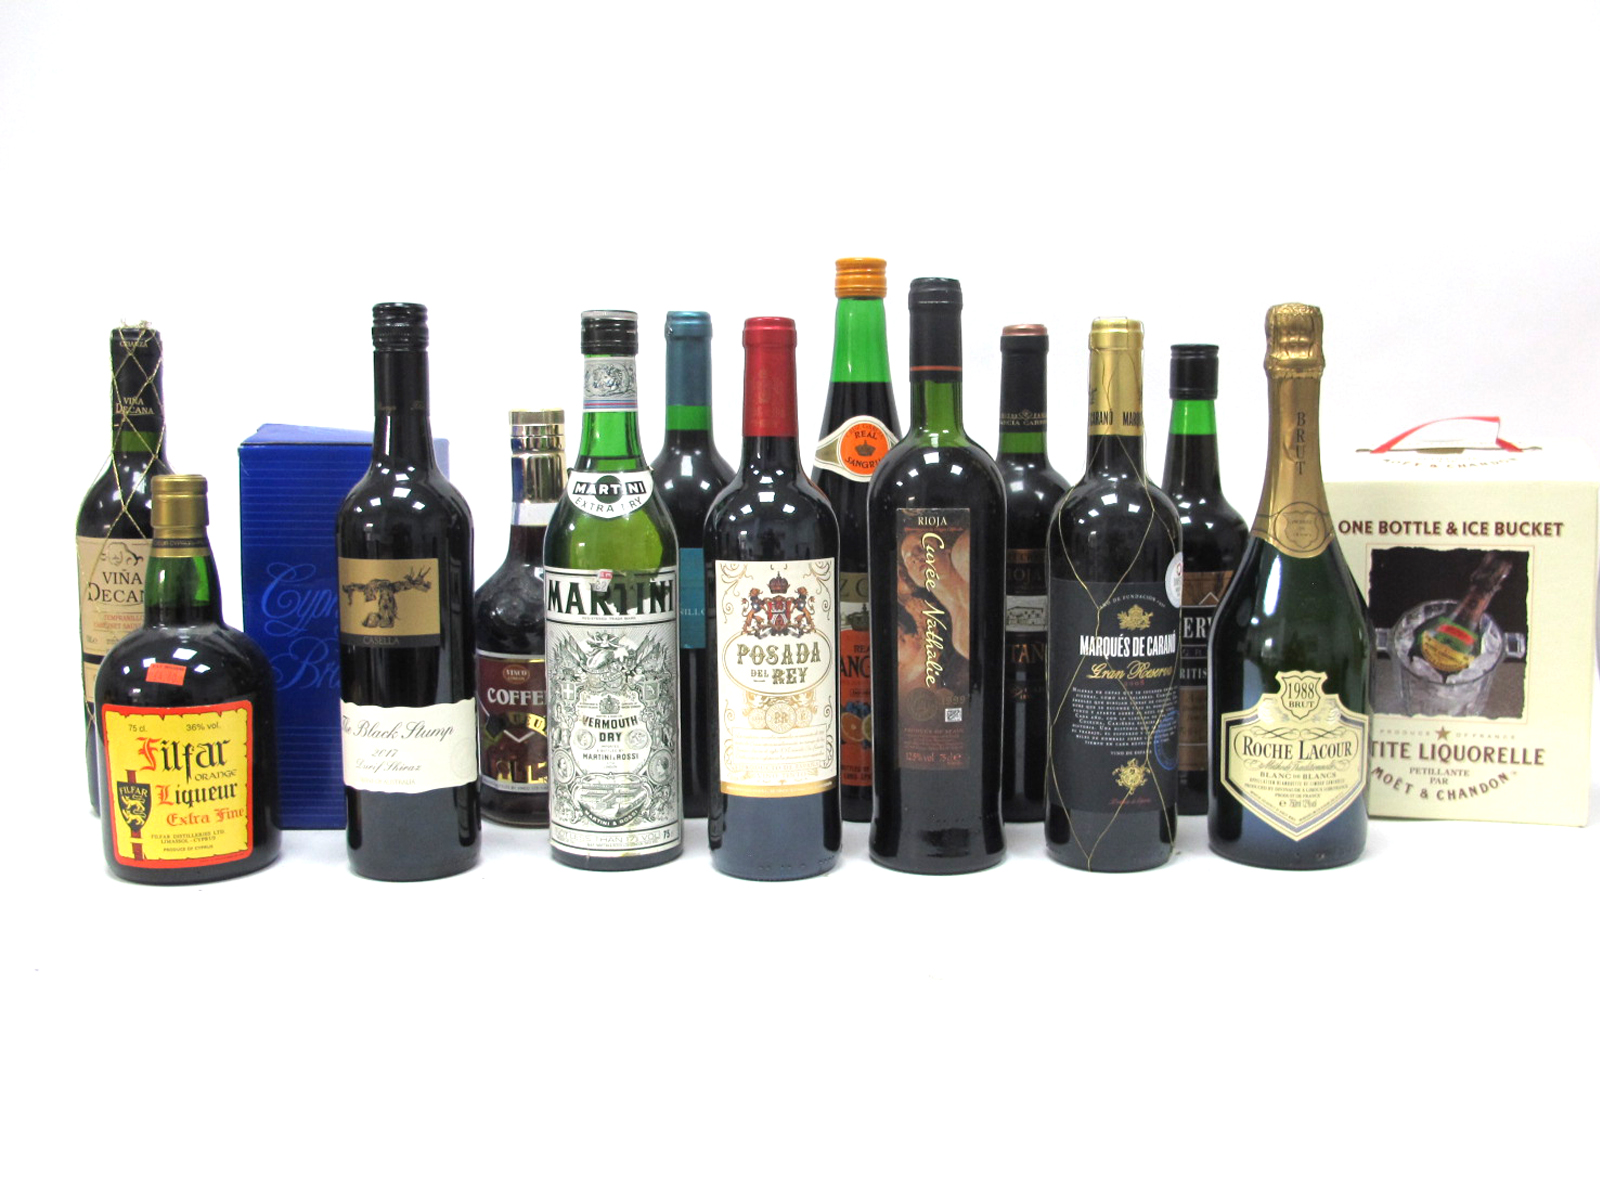 Mixed Assortment - Red Wines, Vermouth, Liqueurs, Petite Liquorelle & Ice Bucket. (15)